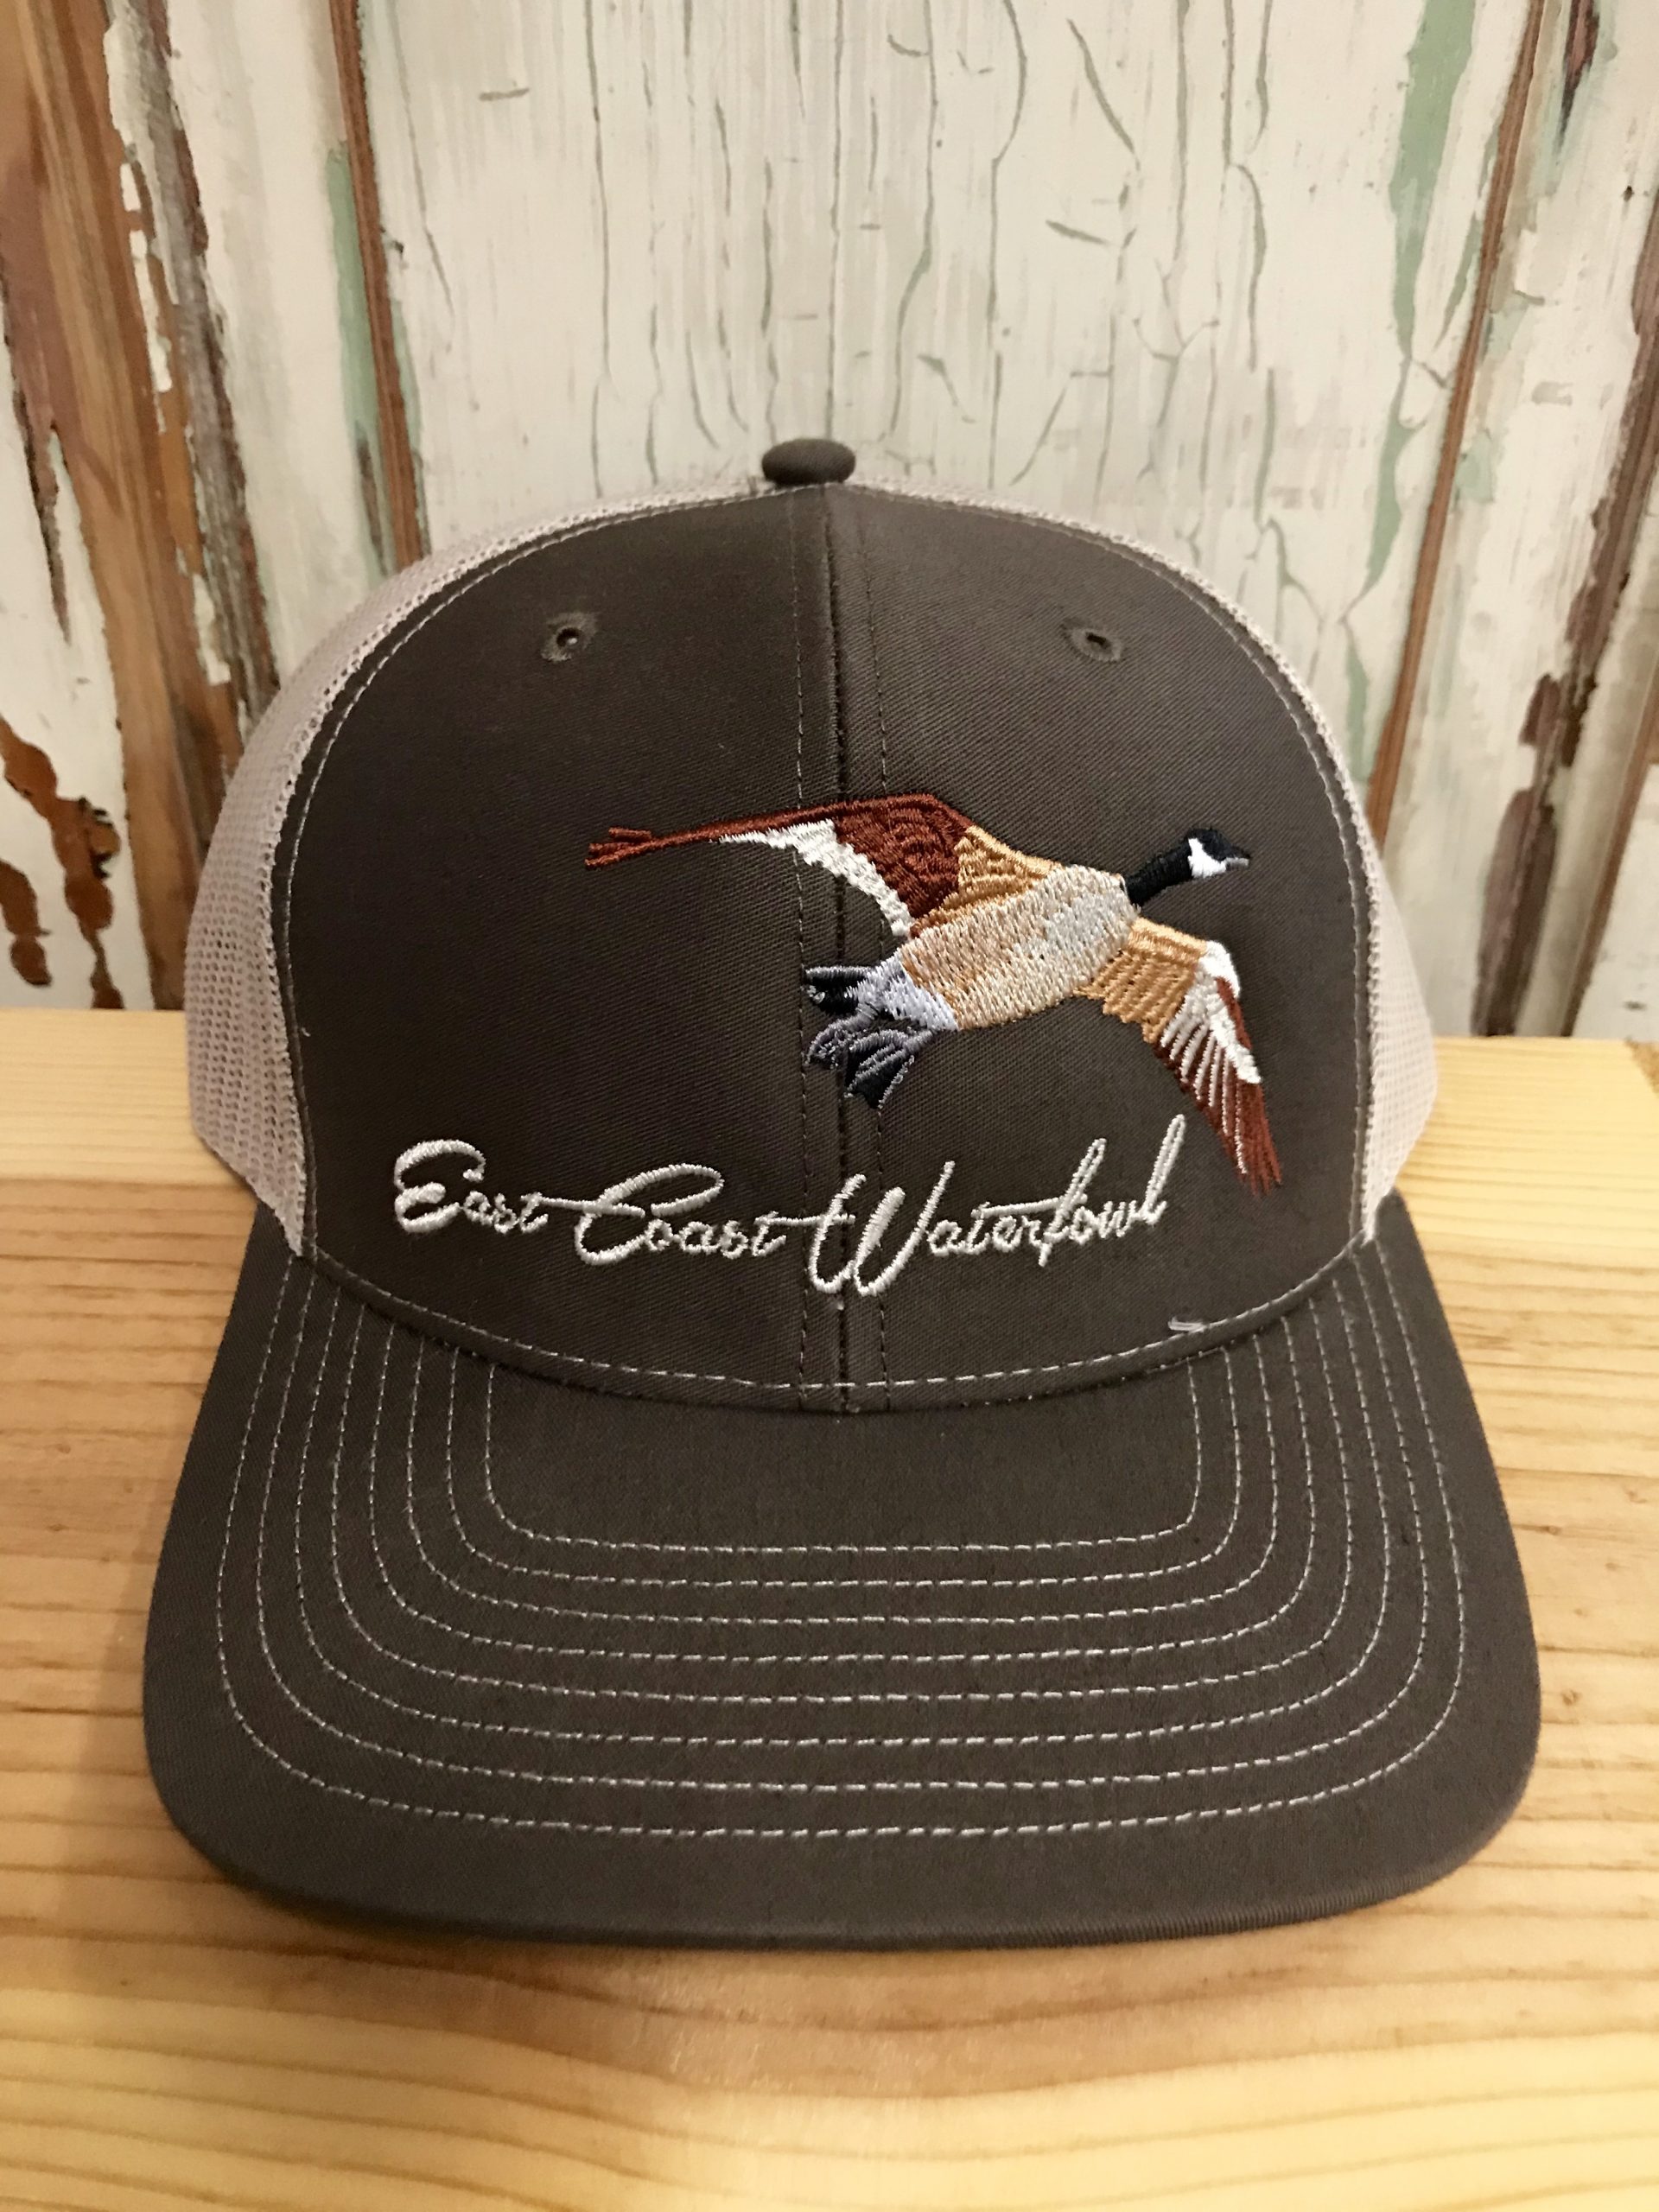 East Coast Waterfowl Goose Trucker Hat Brown/Khaki